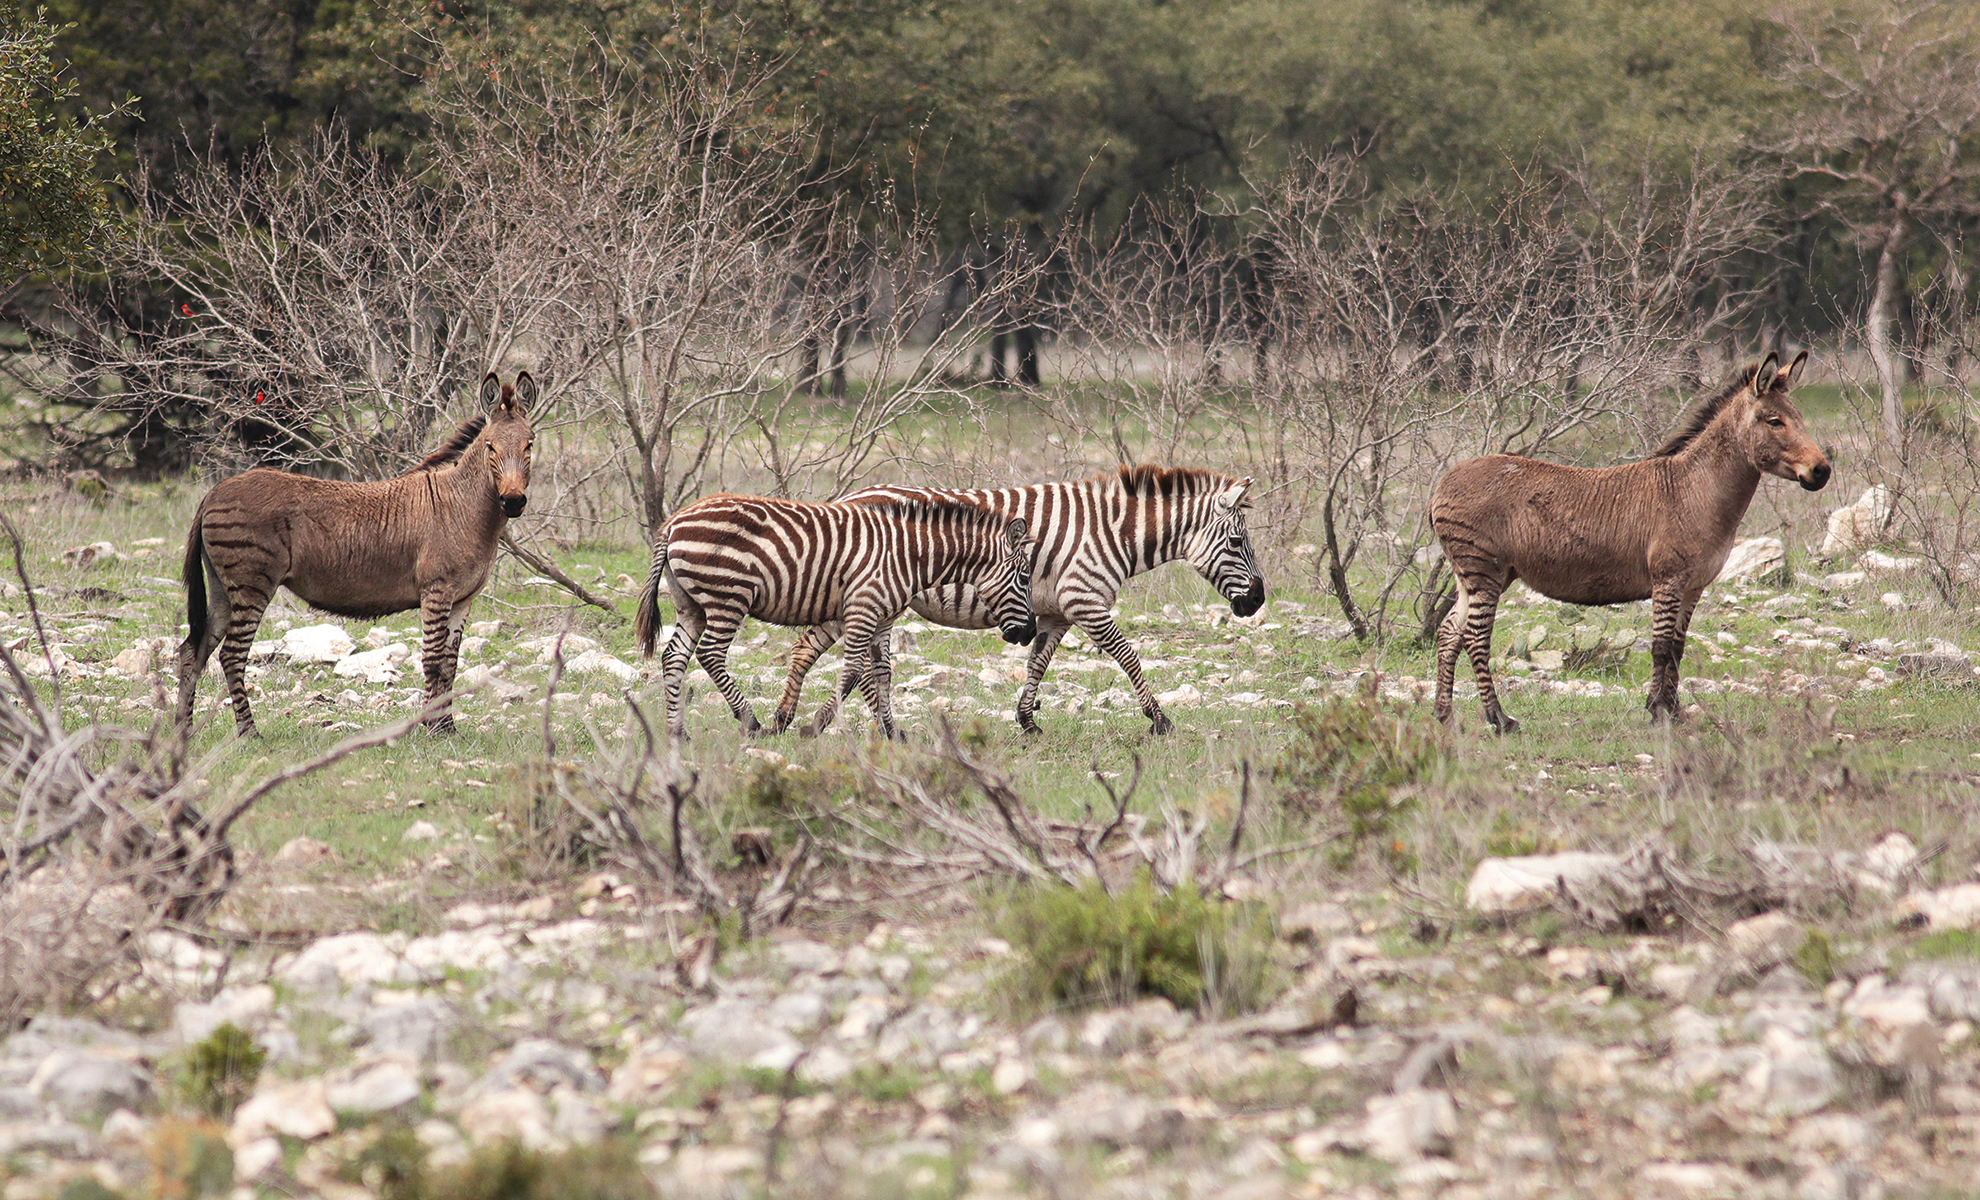 Zonkey (left) and zebra roam the ranch.